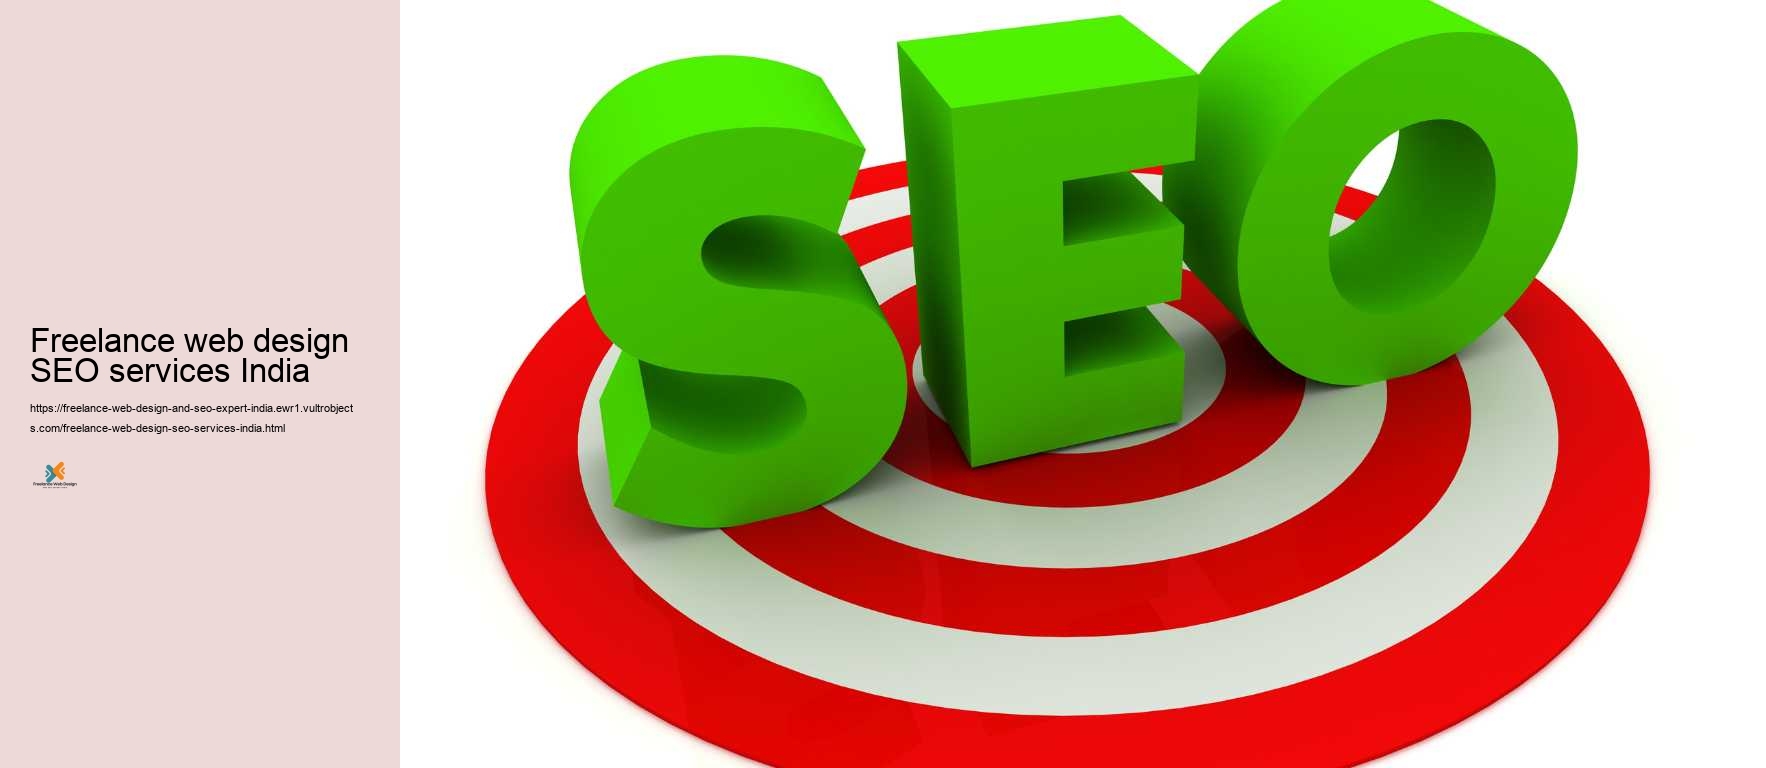 Freelance web design SEO services India